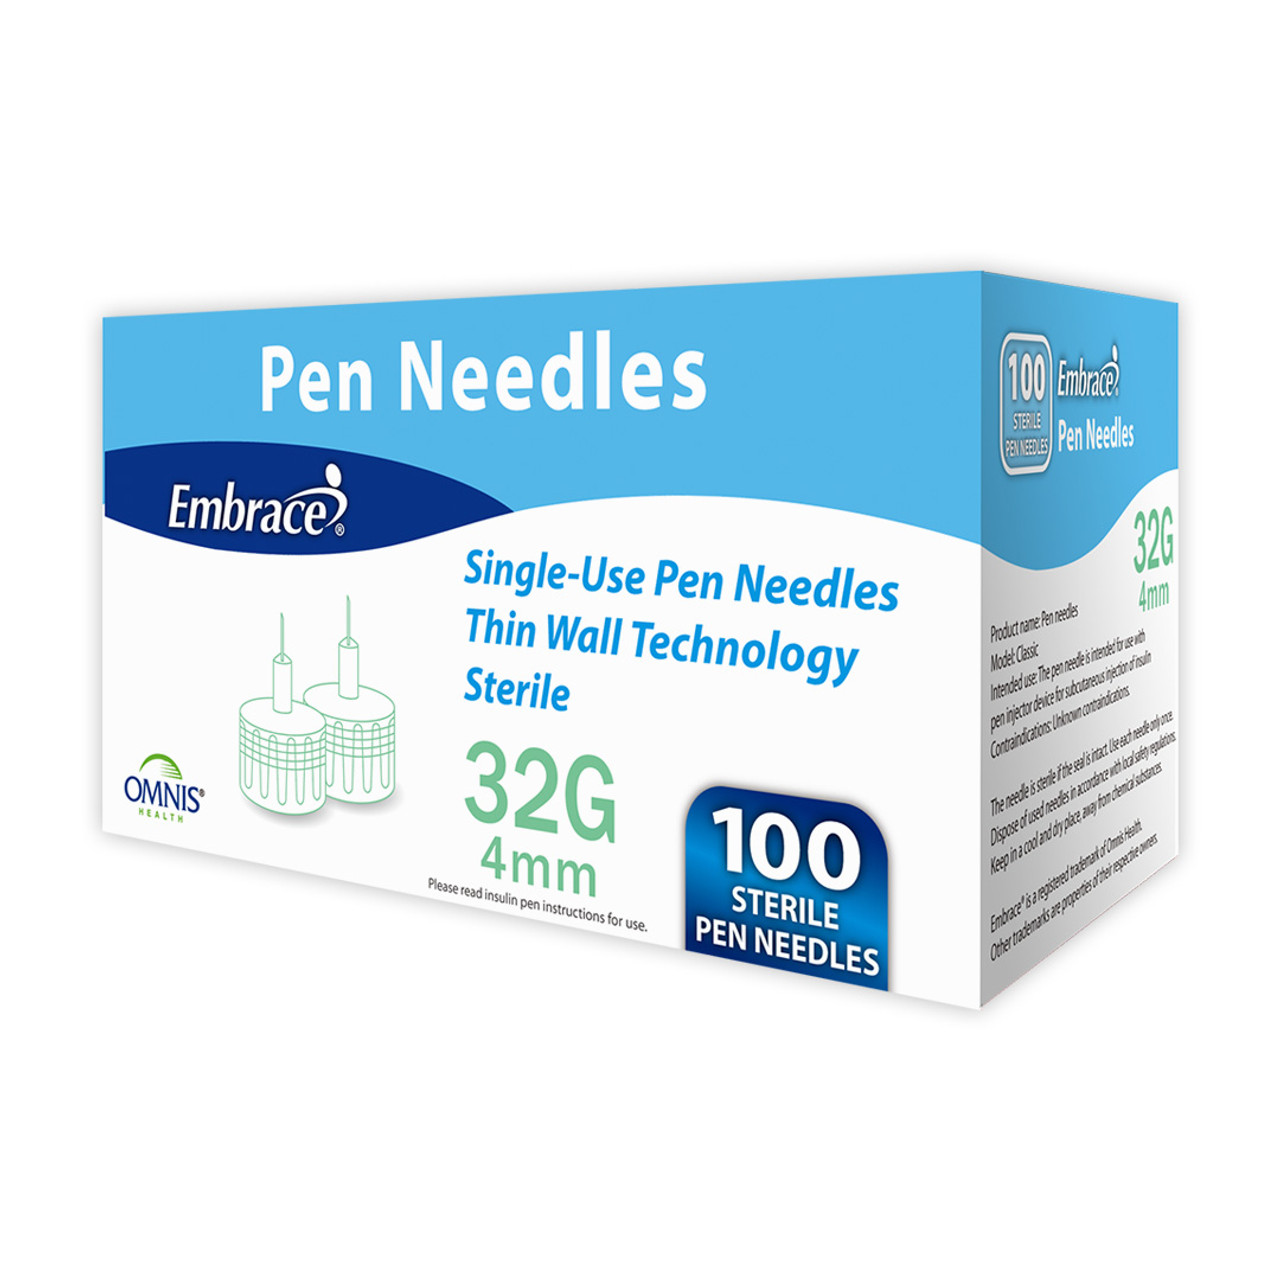  SIMPLI Insulin Pen Needles for at-Home Insulin